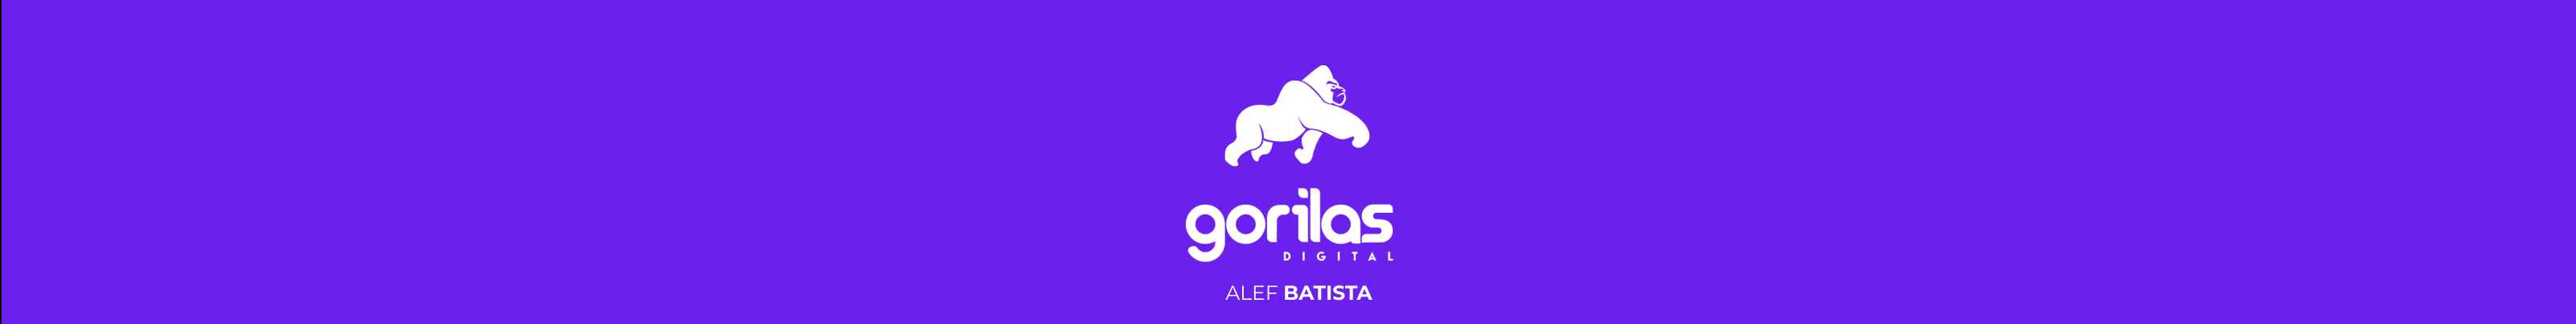 Banner de perfil de GORILAS Digital